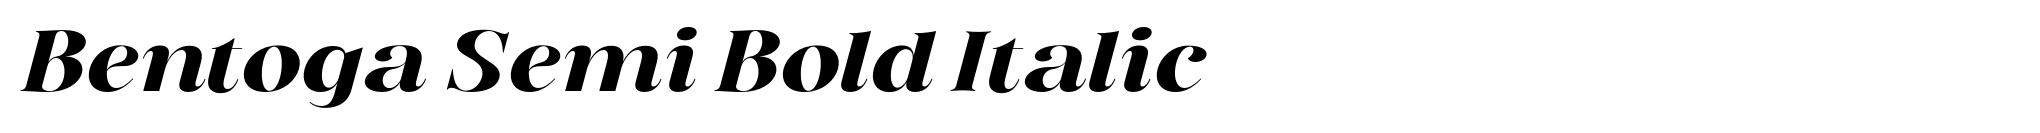 Bentoga Semi Bold Italic image